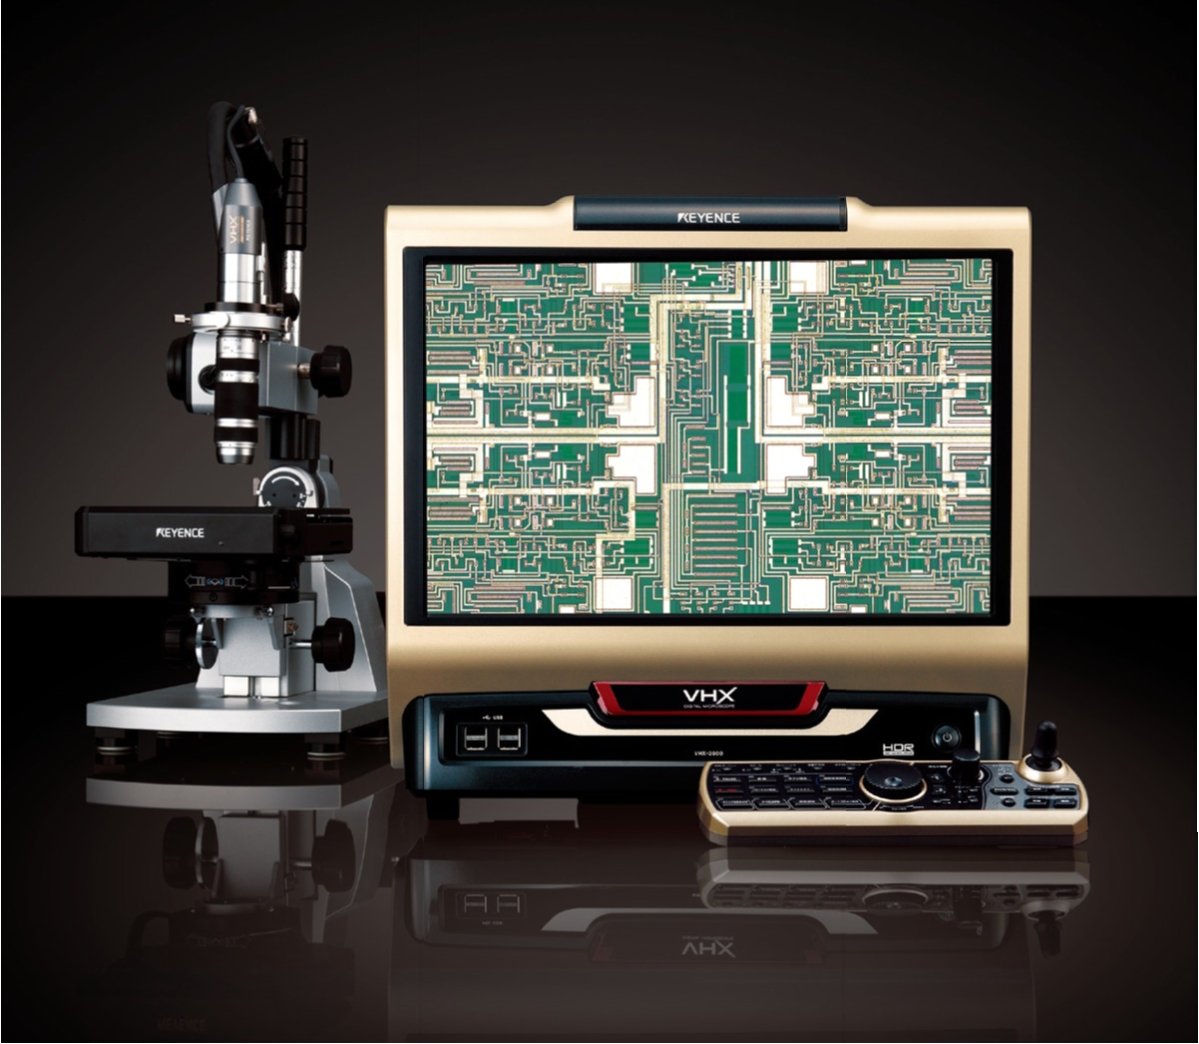 VHX-2000 Digital Microscope